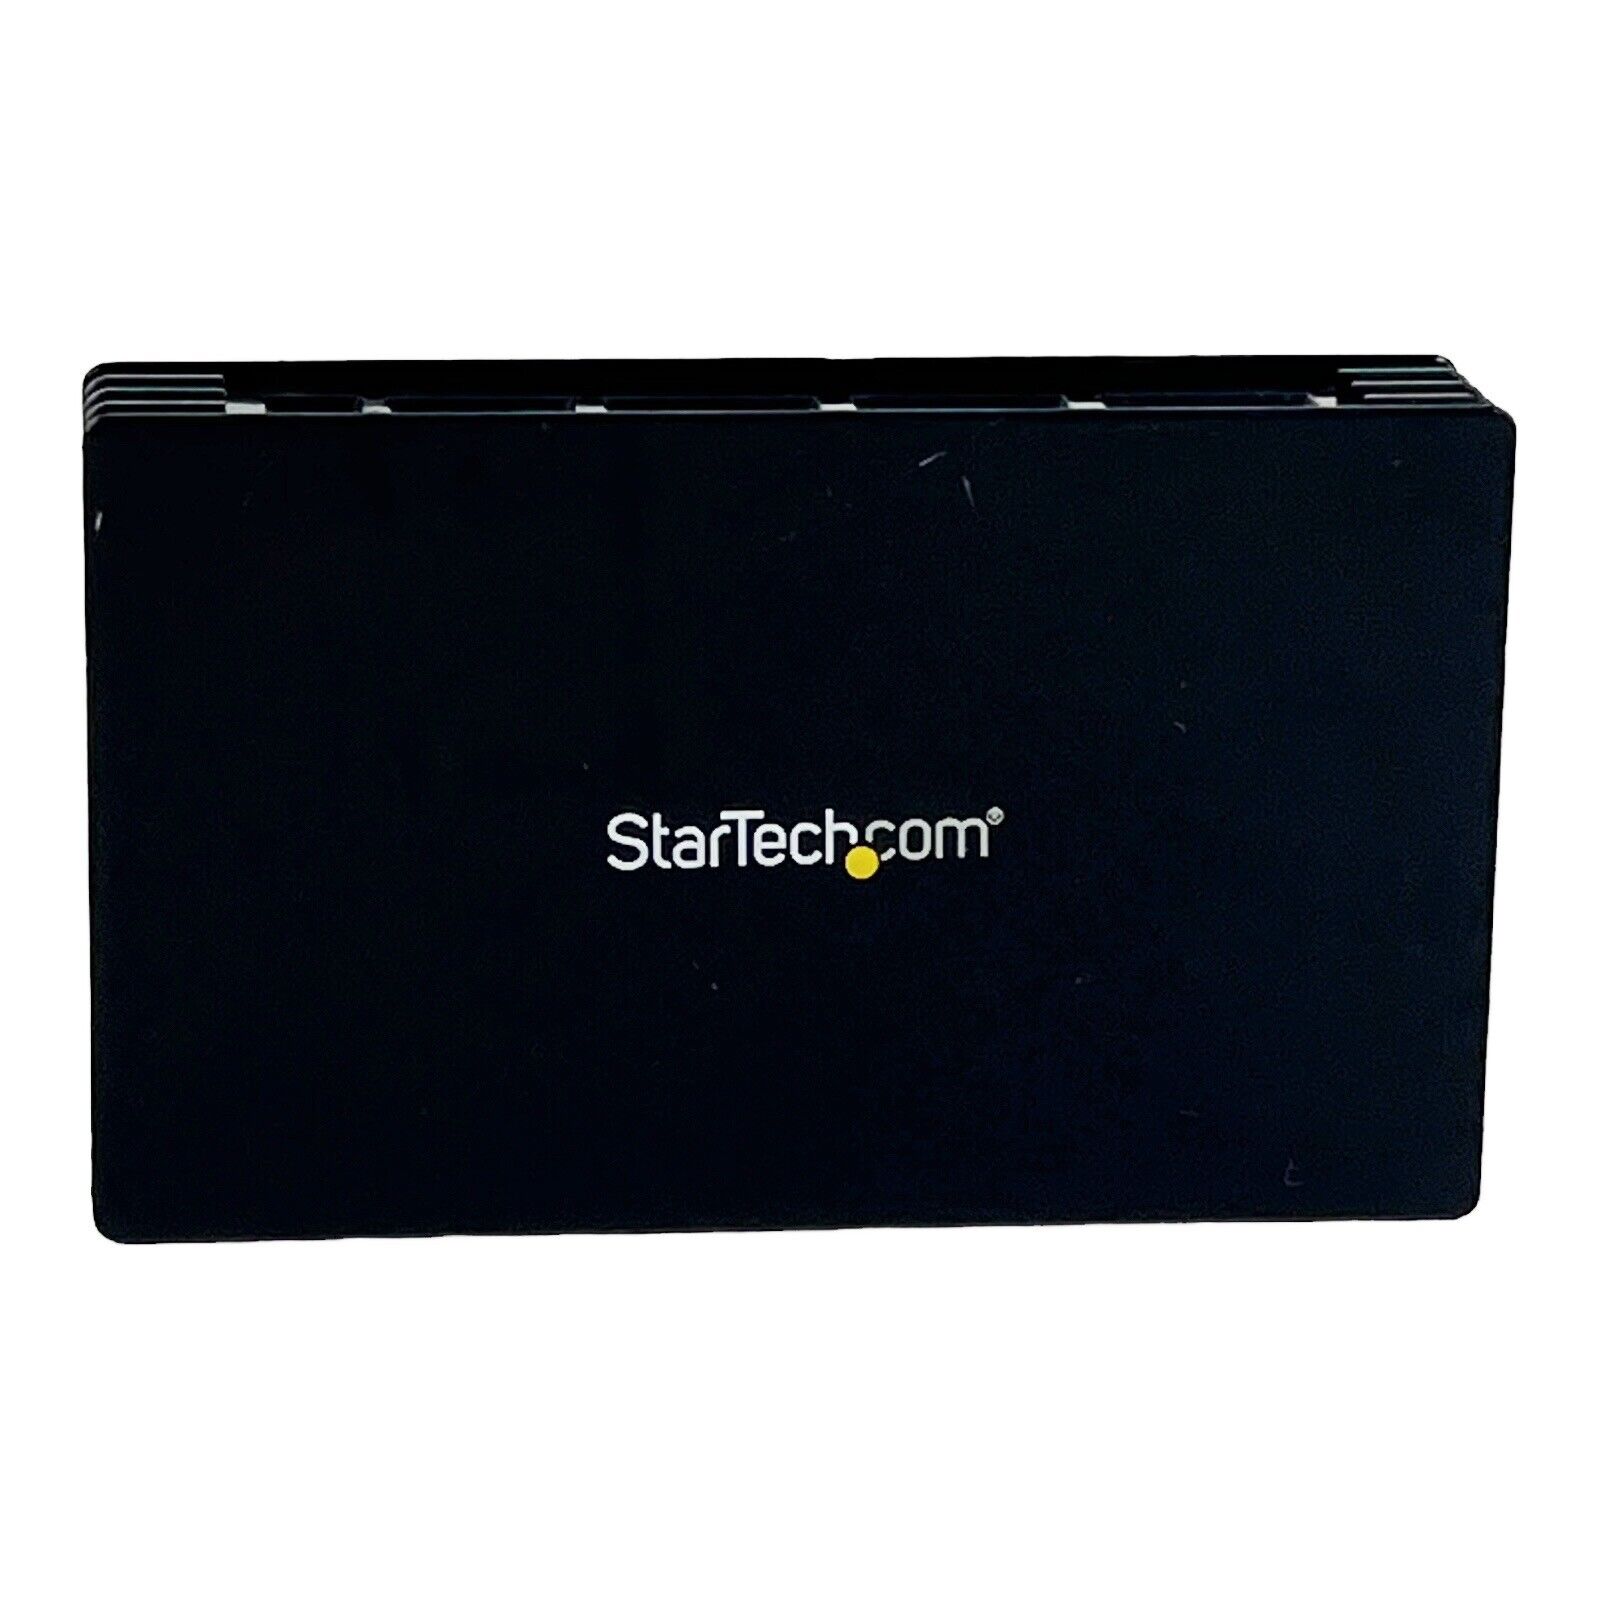 Startech.com 7 Port USB Hub - ST7202USB (NO CABLES)